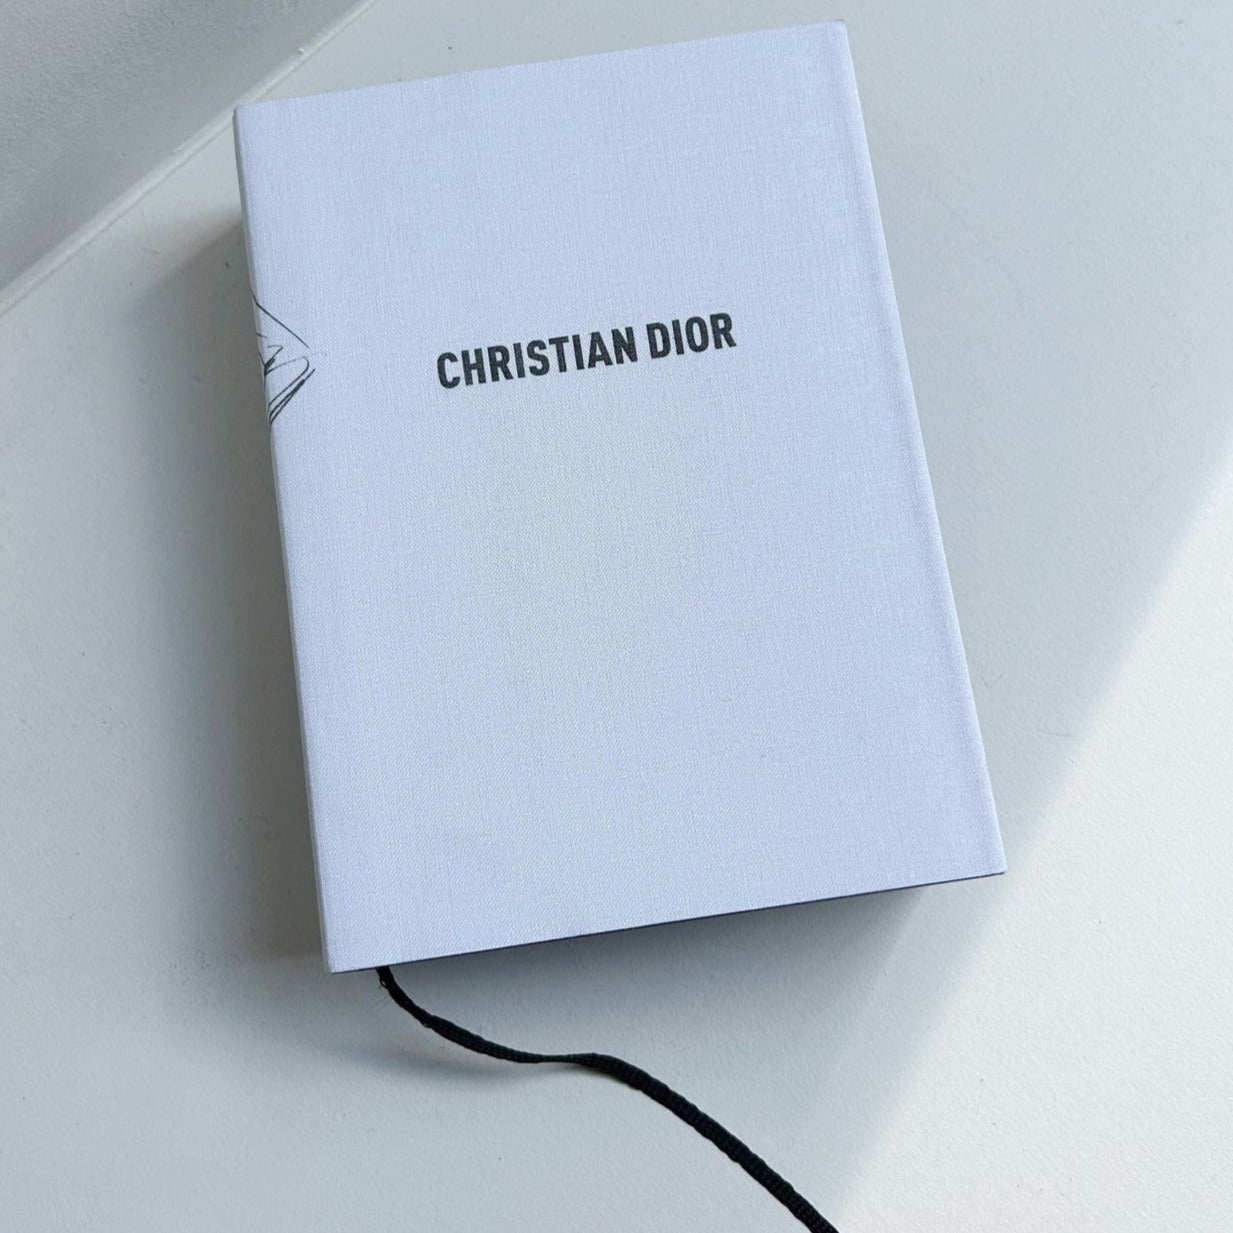 Christian Dior – CHRISTINE ALCALAY